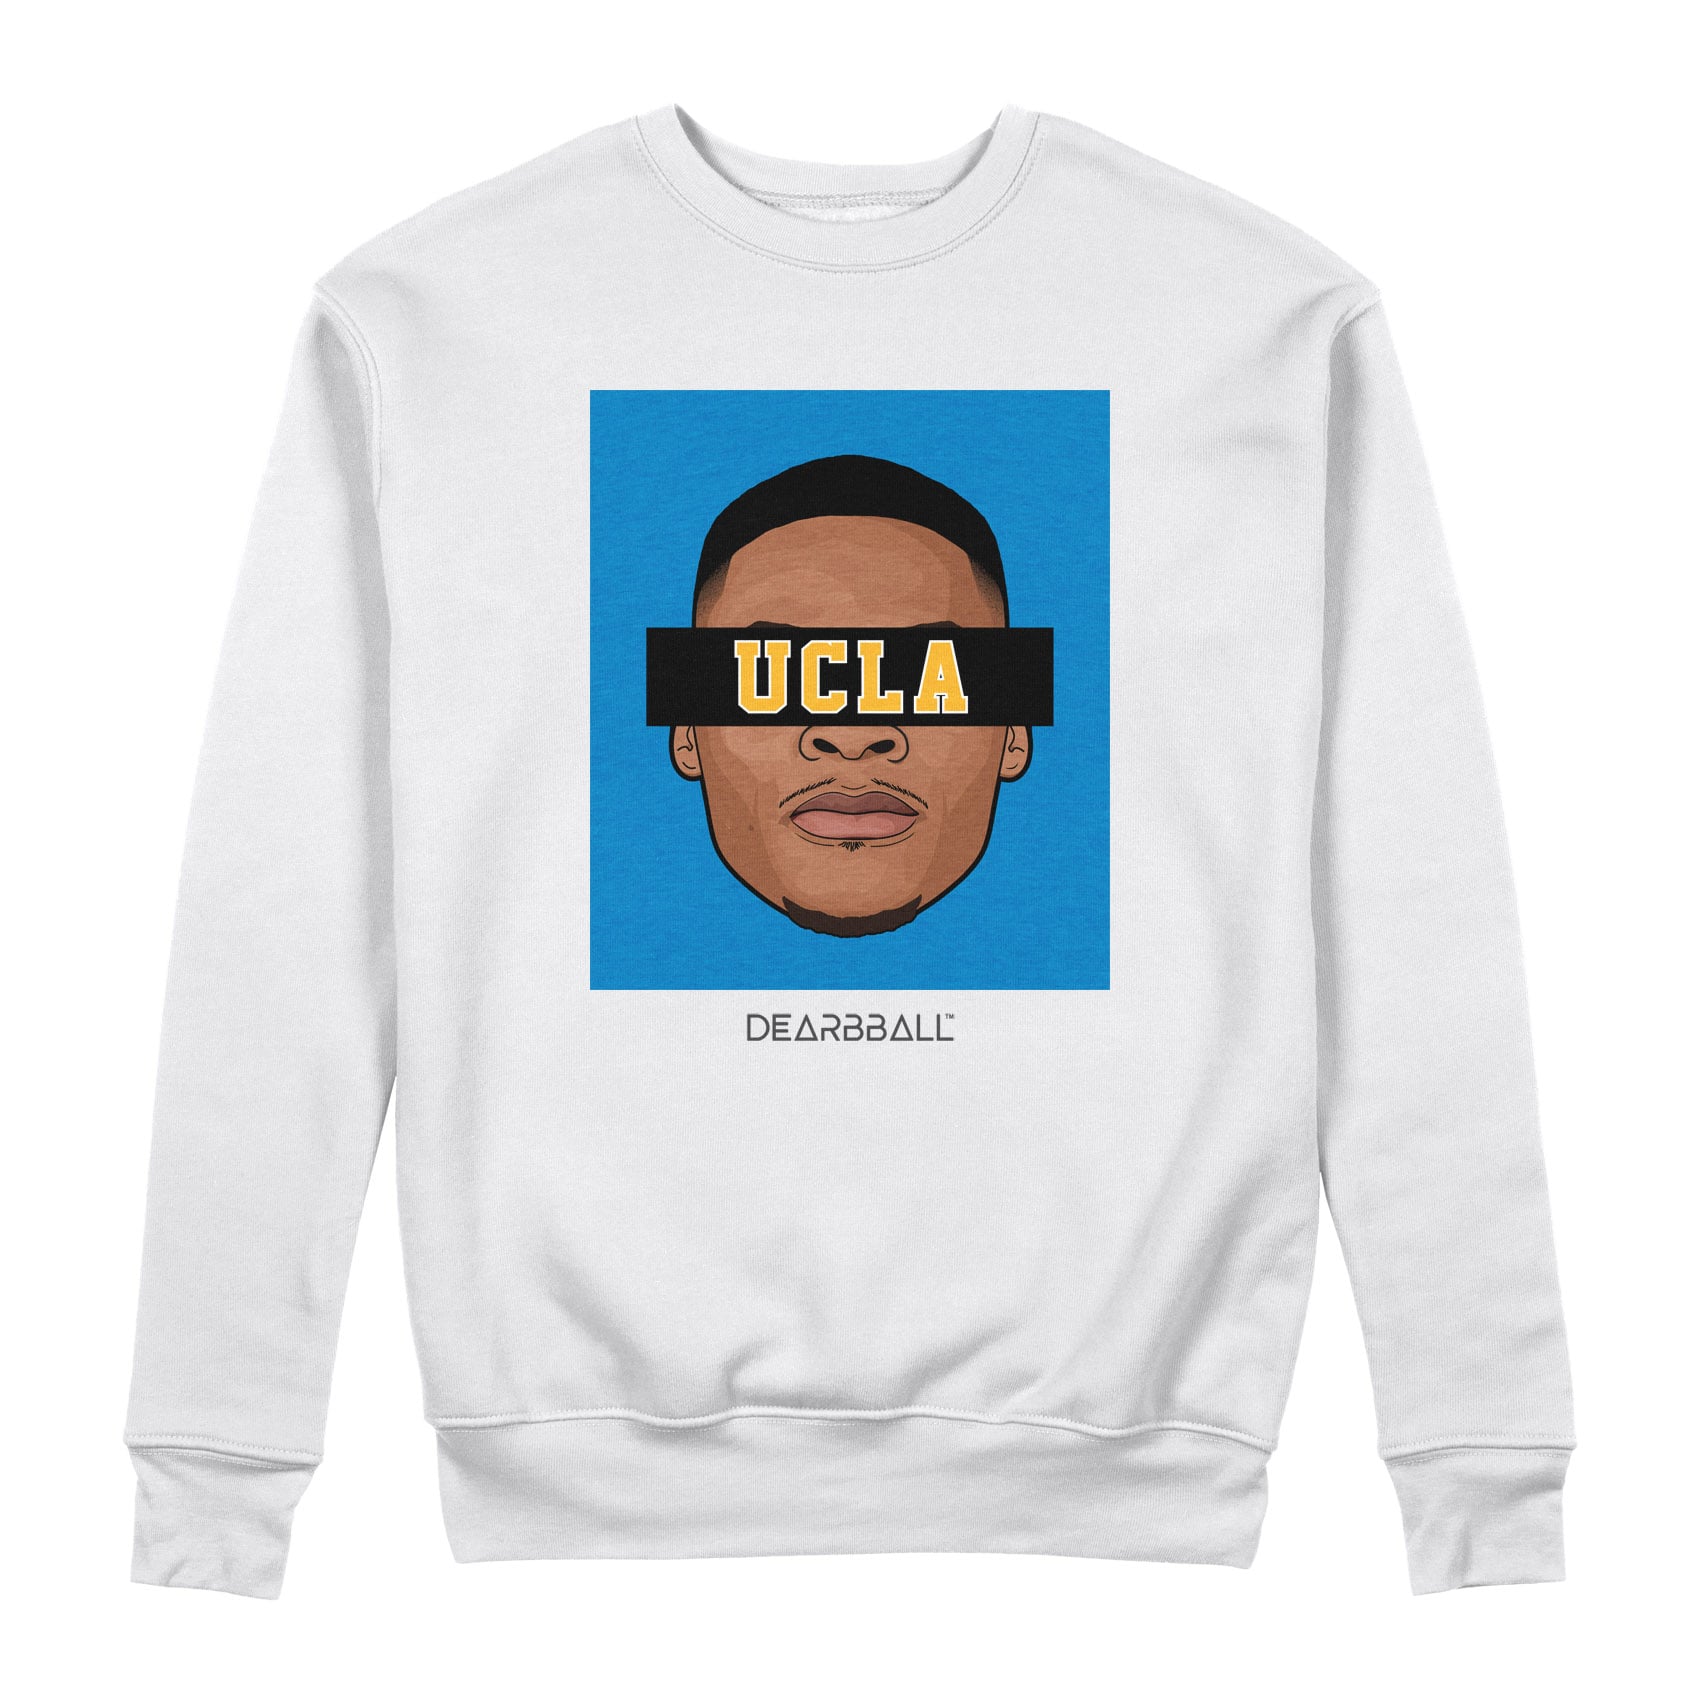 DearBBall Sweat - UCLA 2007`08 College